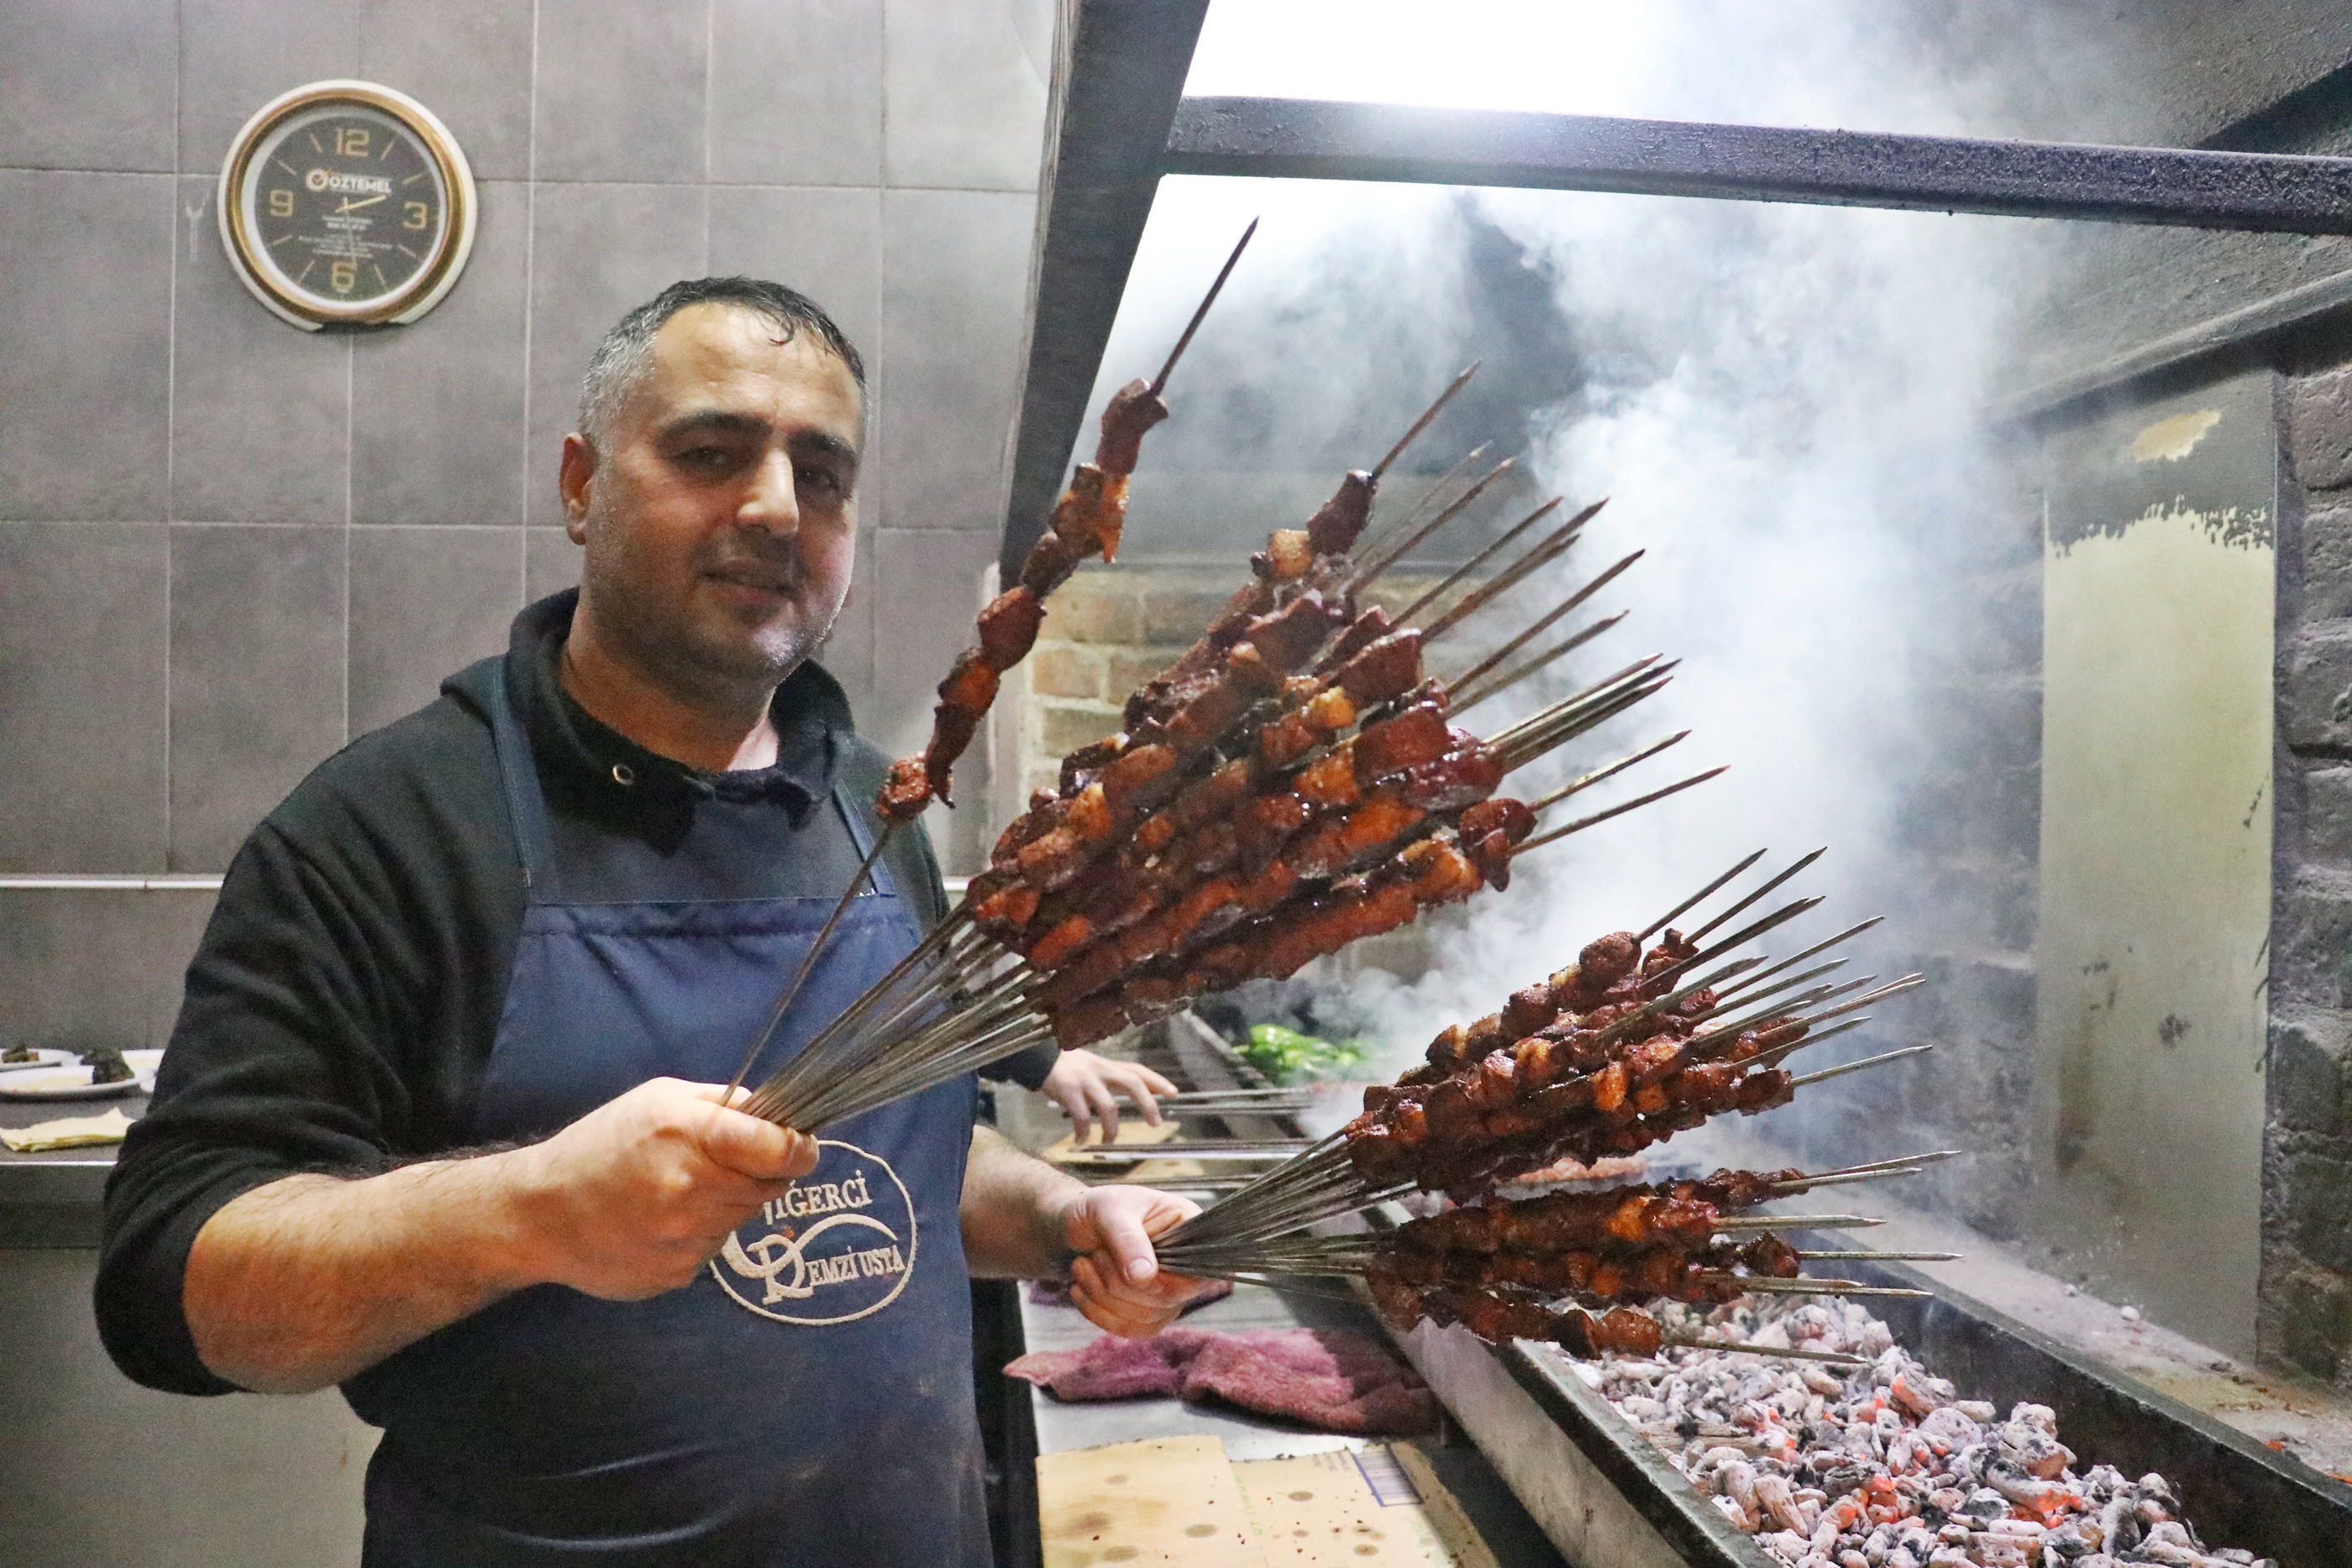 diyarbakirda-kuzu-cigerin-fiyati-eti-gecti-kasapta-kilosu-420-tl-1301-dhaphoto2.jpg